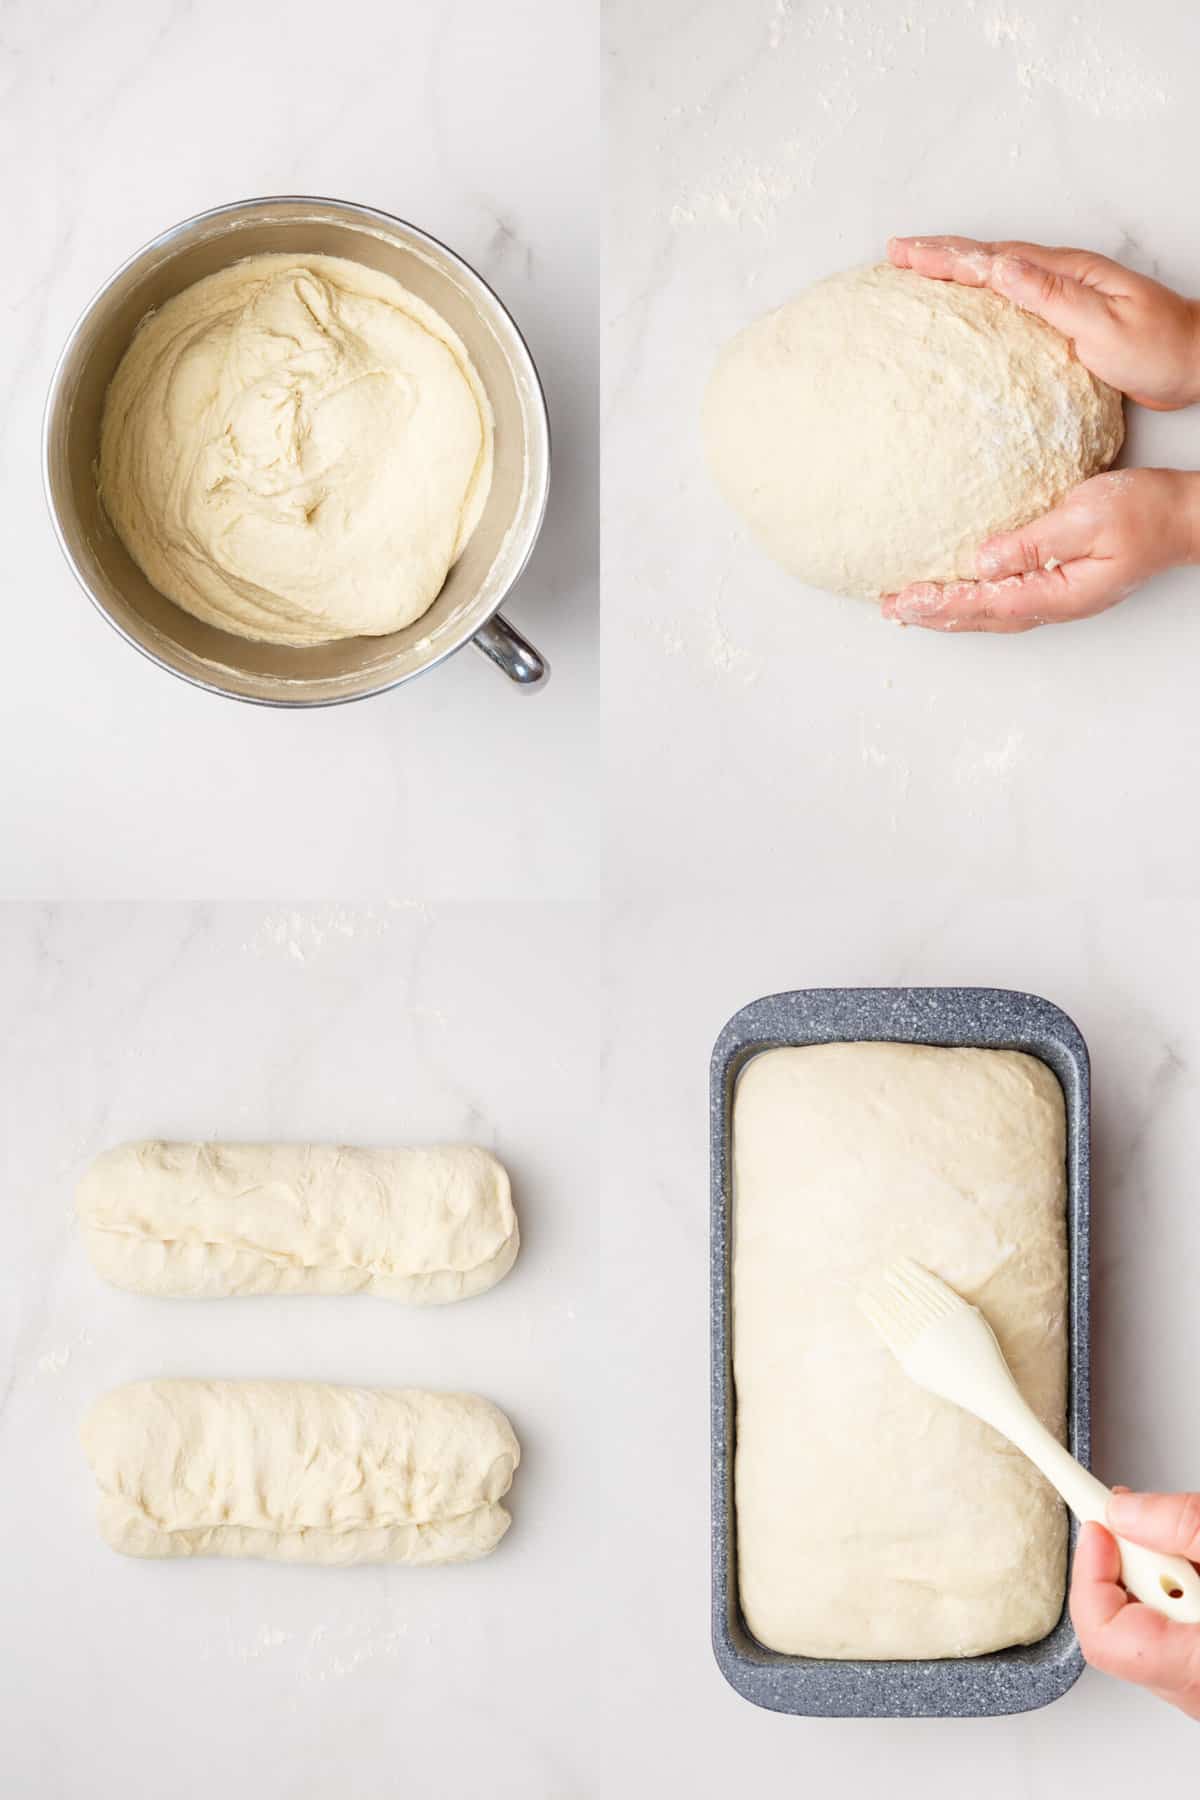 steps to make homemade white sandwich bread.